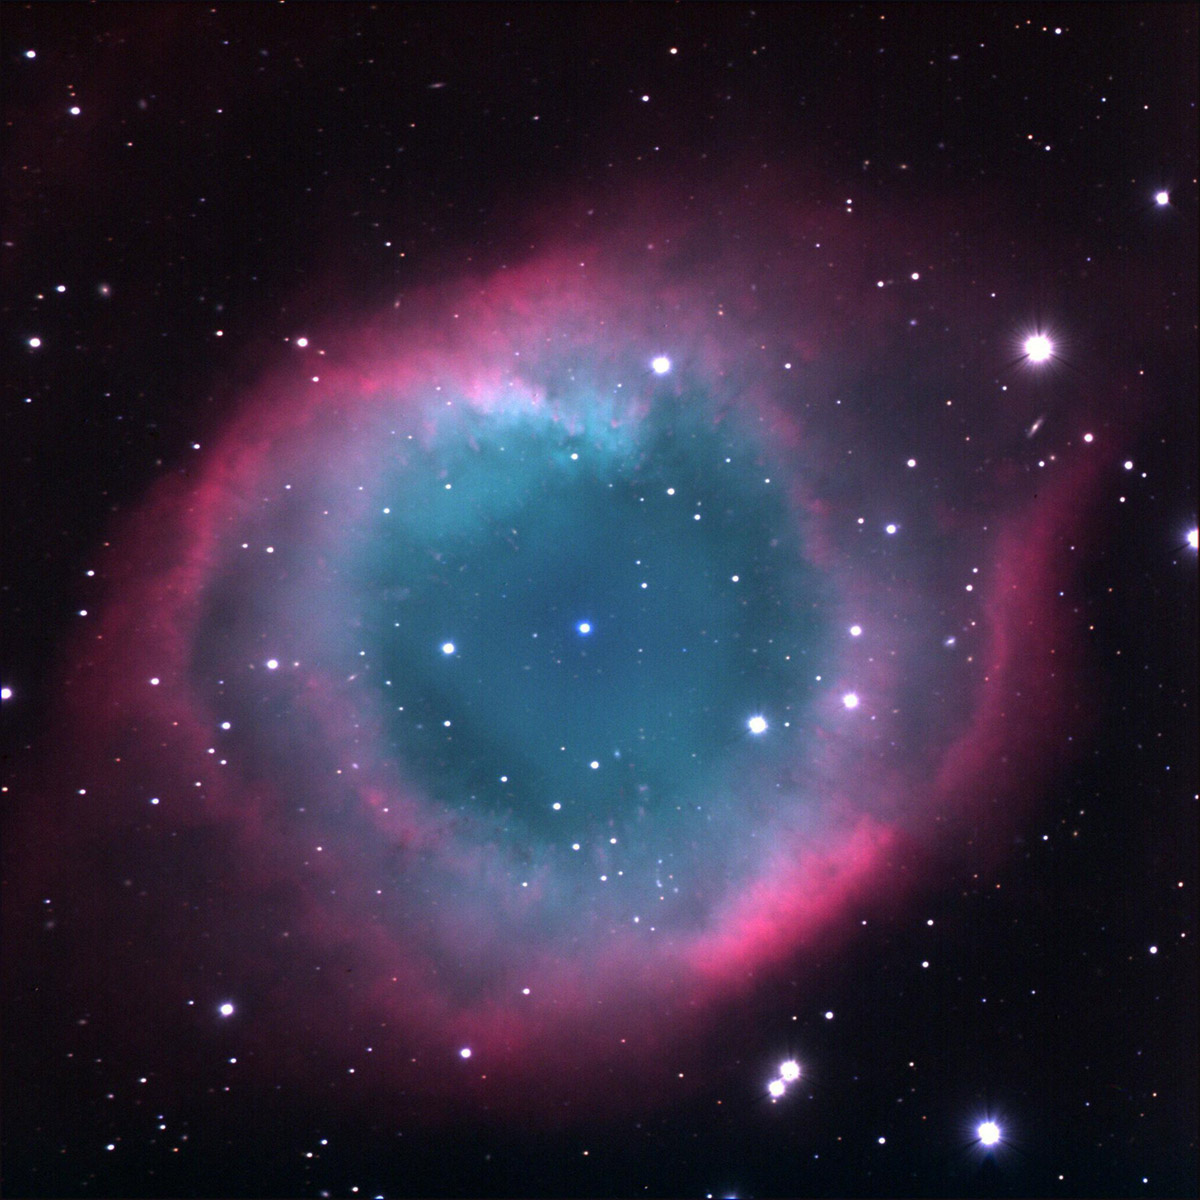 http://2.bp.blogspot.com/_fPm-zSXJqtI/S9NKVShPp4I/AAAAAAAAAYo/Vx5Rzh09TO8/s1600/helix-nebula-hubble.jpg